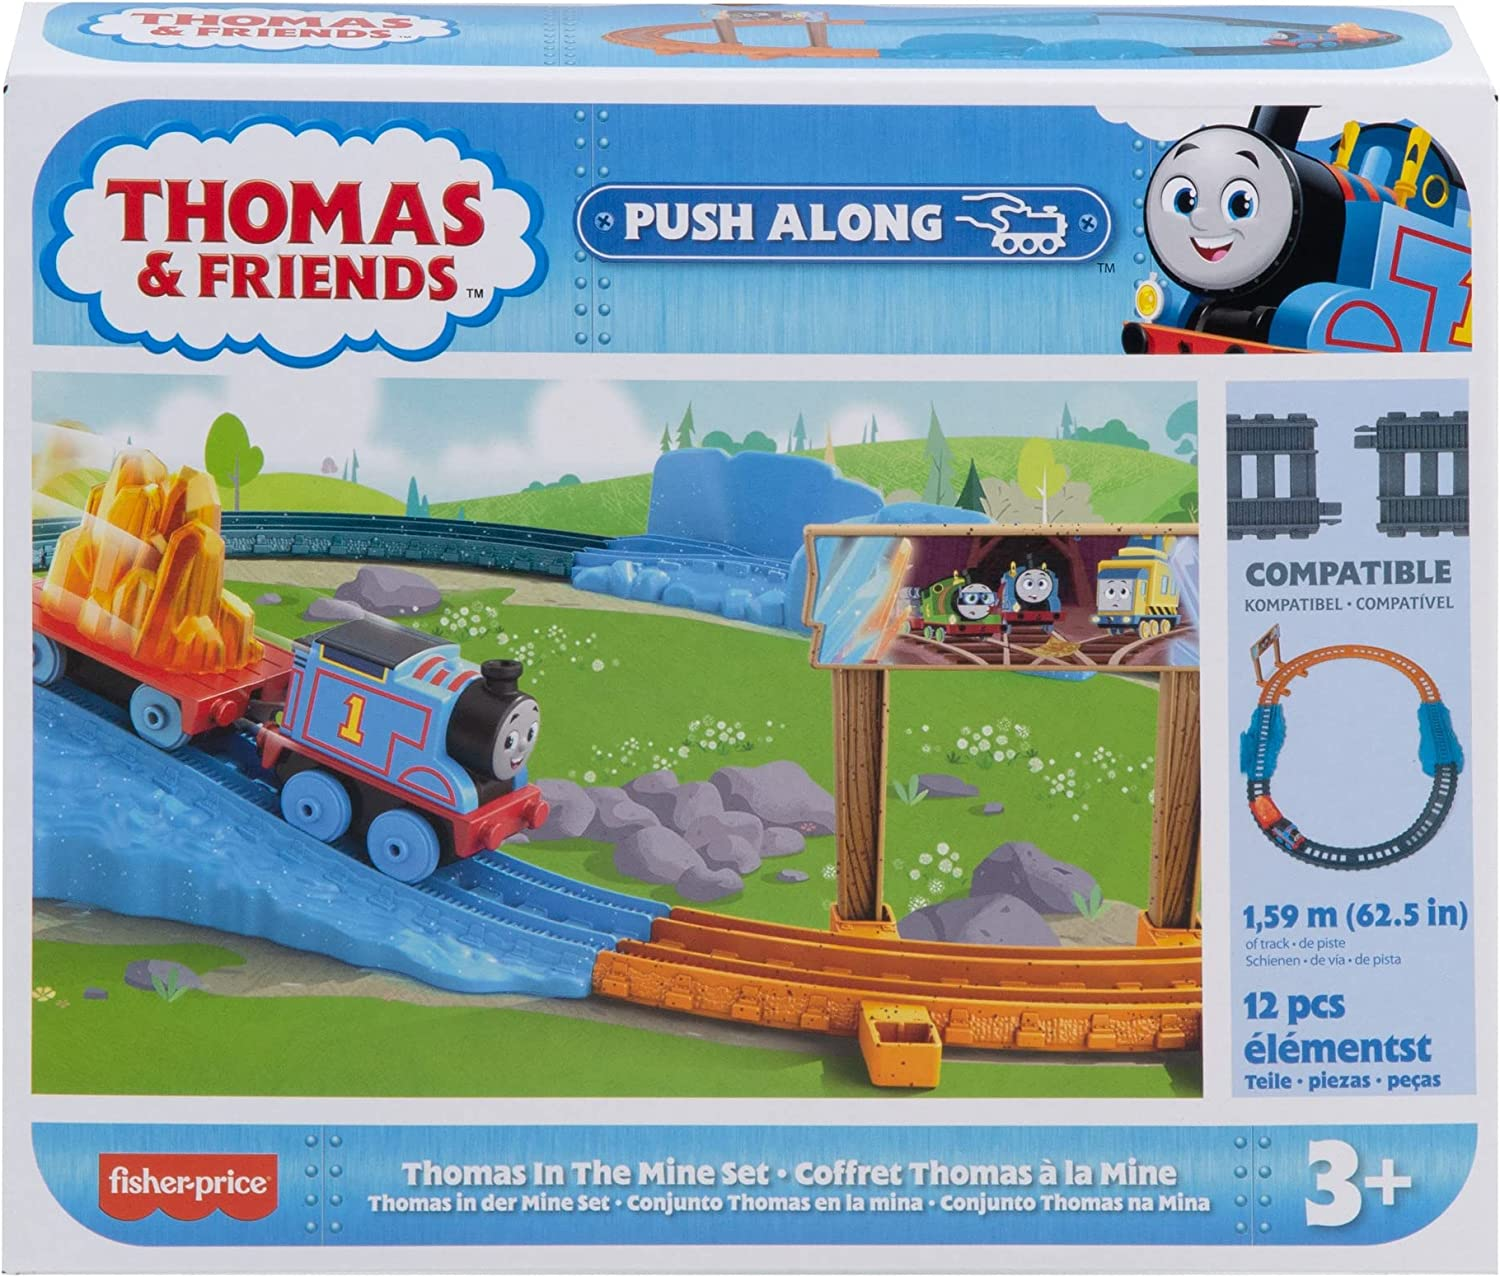 Locomotiva Motorizada - Thomas - Thomas e Seus Amigos - Fisher